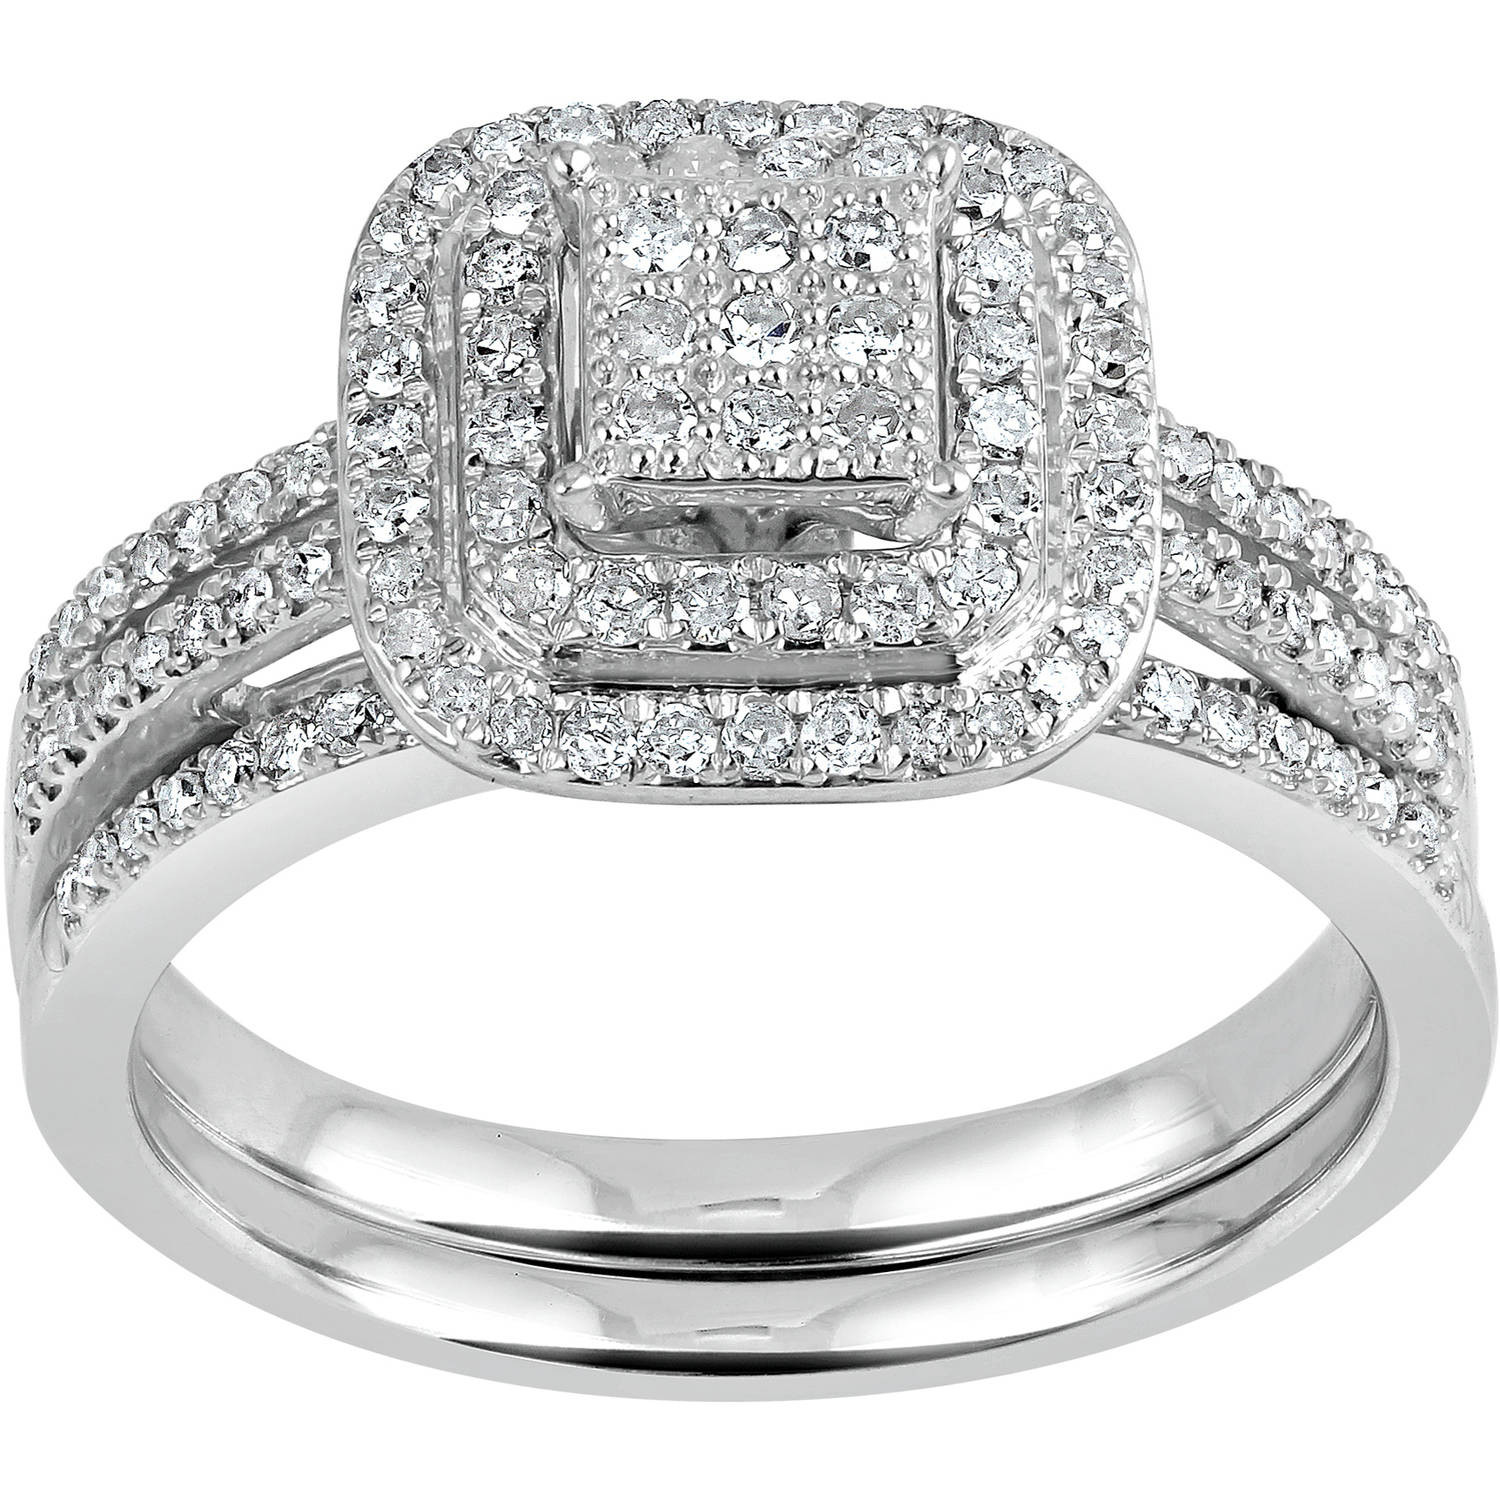 Walmart Wedding Ring Sets
 Forever Bride 1 4 Carat T W Diamond Bridal Set in